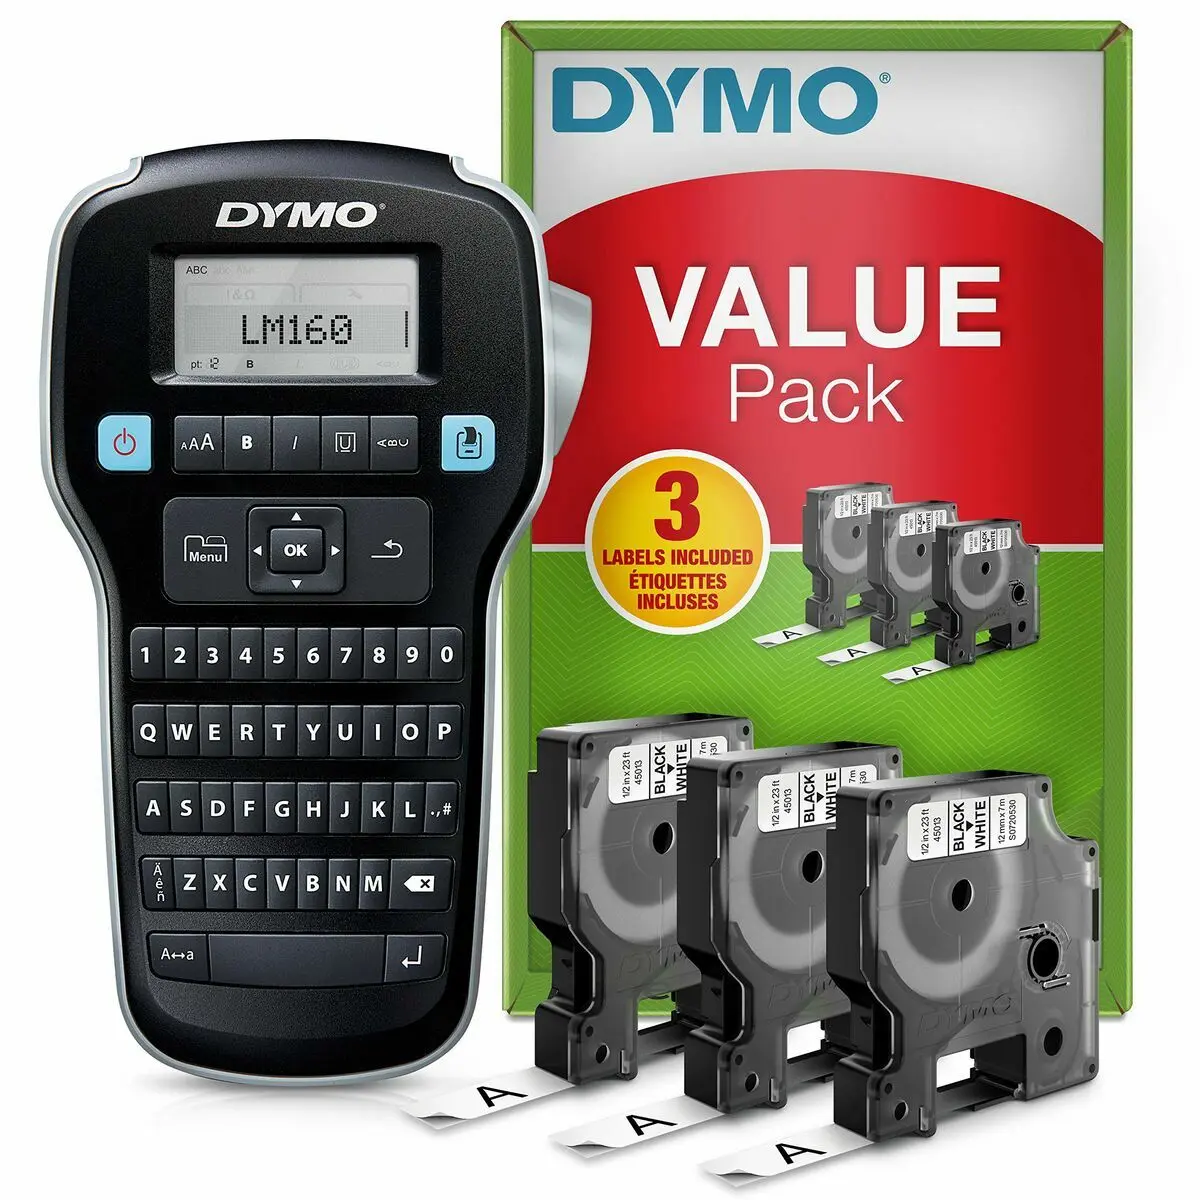 Etichettatrice Elettrica Portatile Dymo LM160